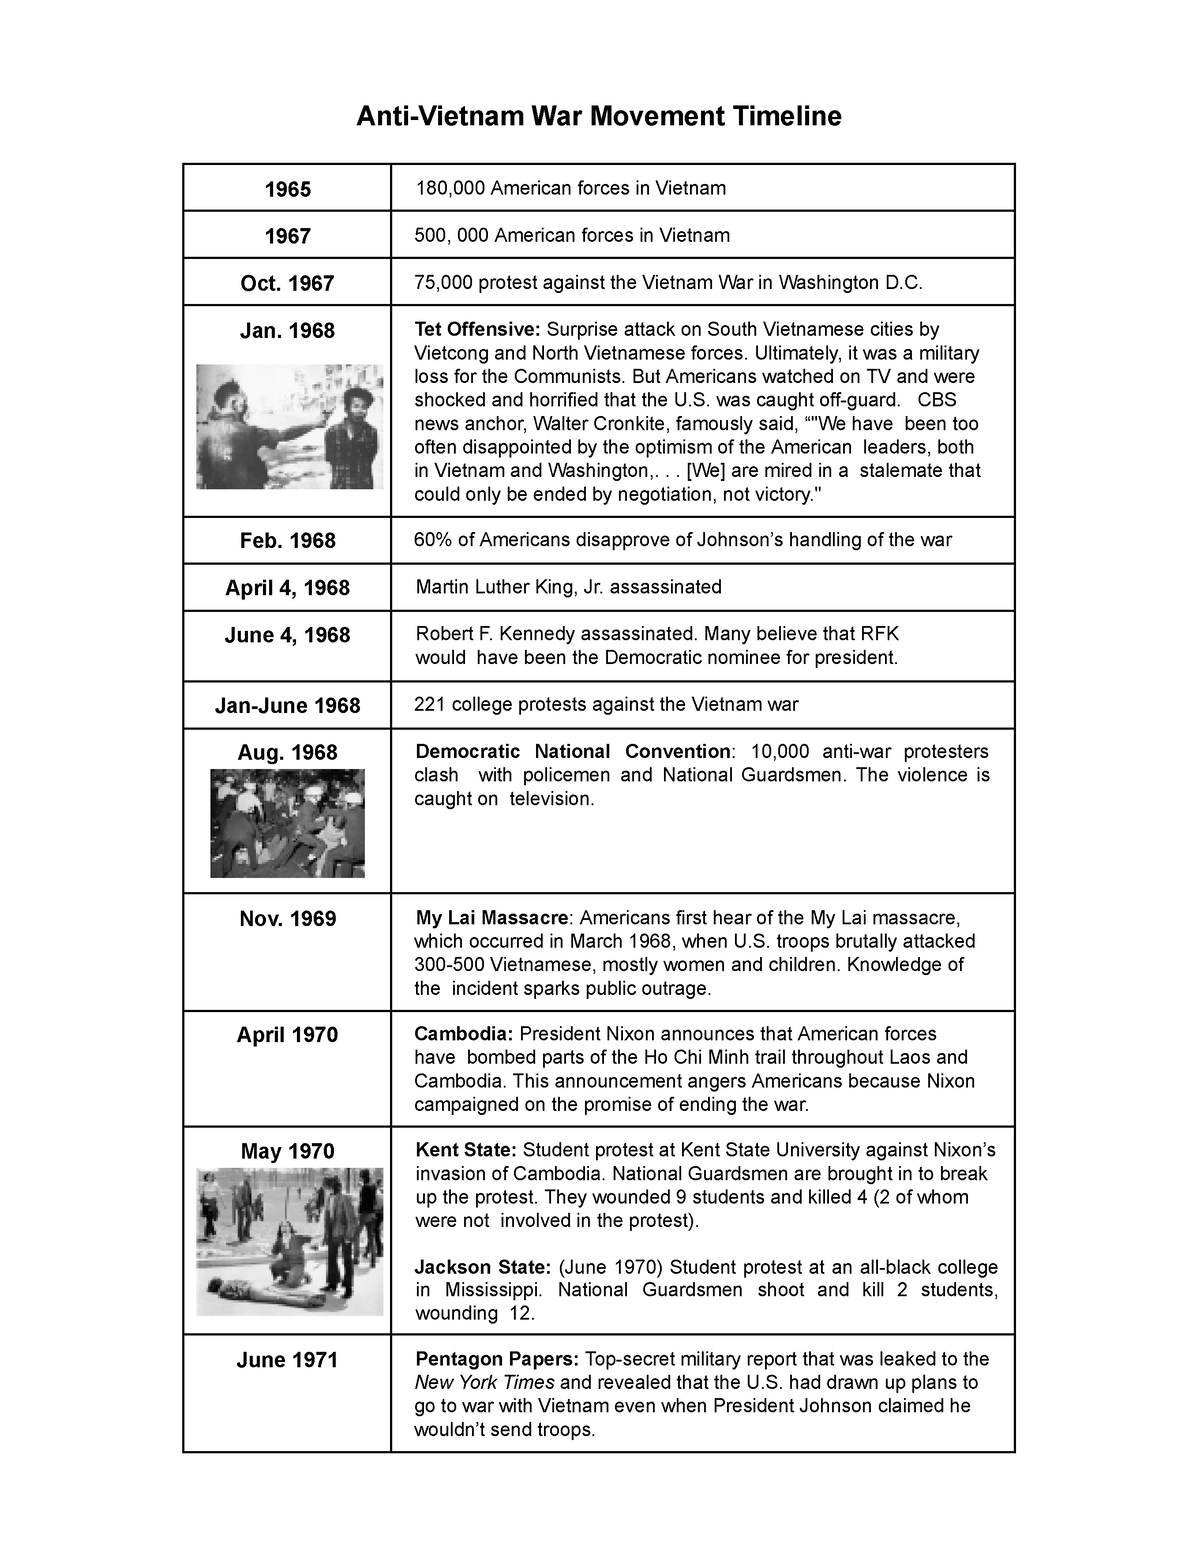 Anti-Vietnam War Movement Analysis - Anti-Vietnam War Movement Timeline ...